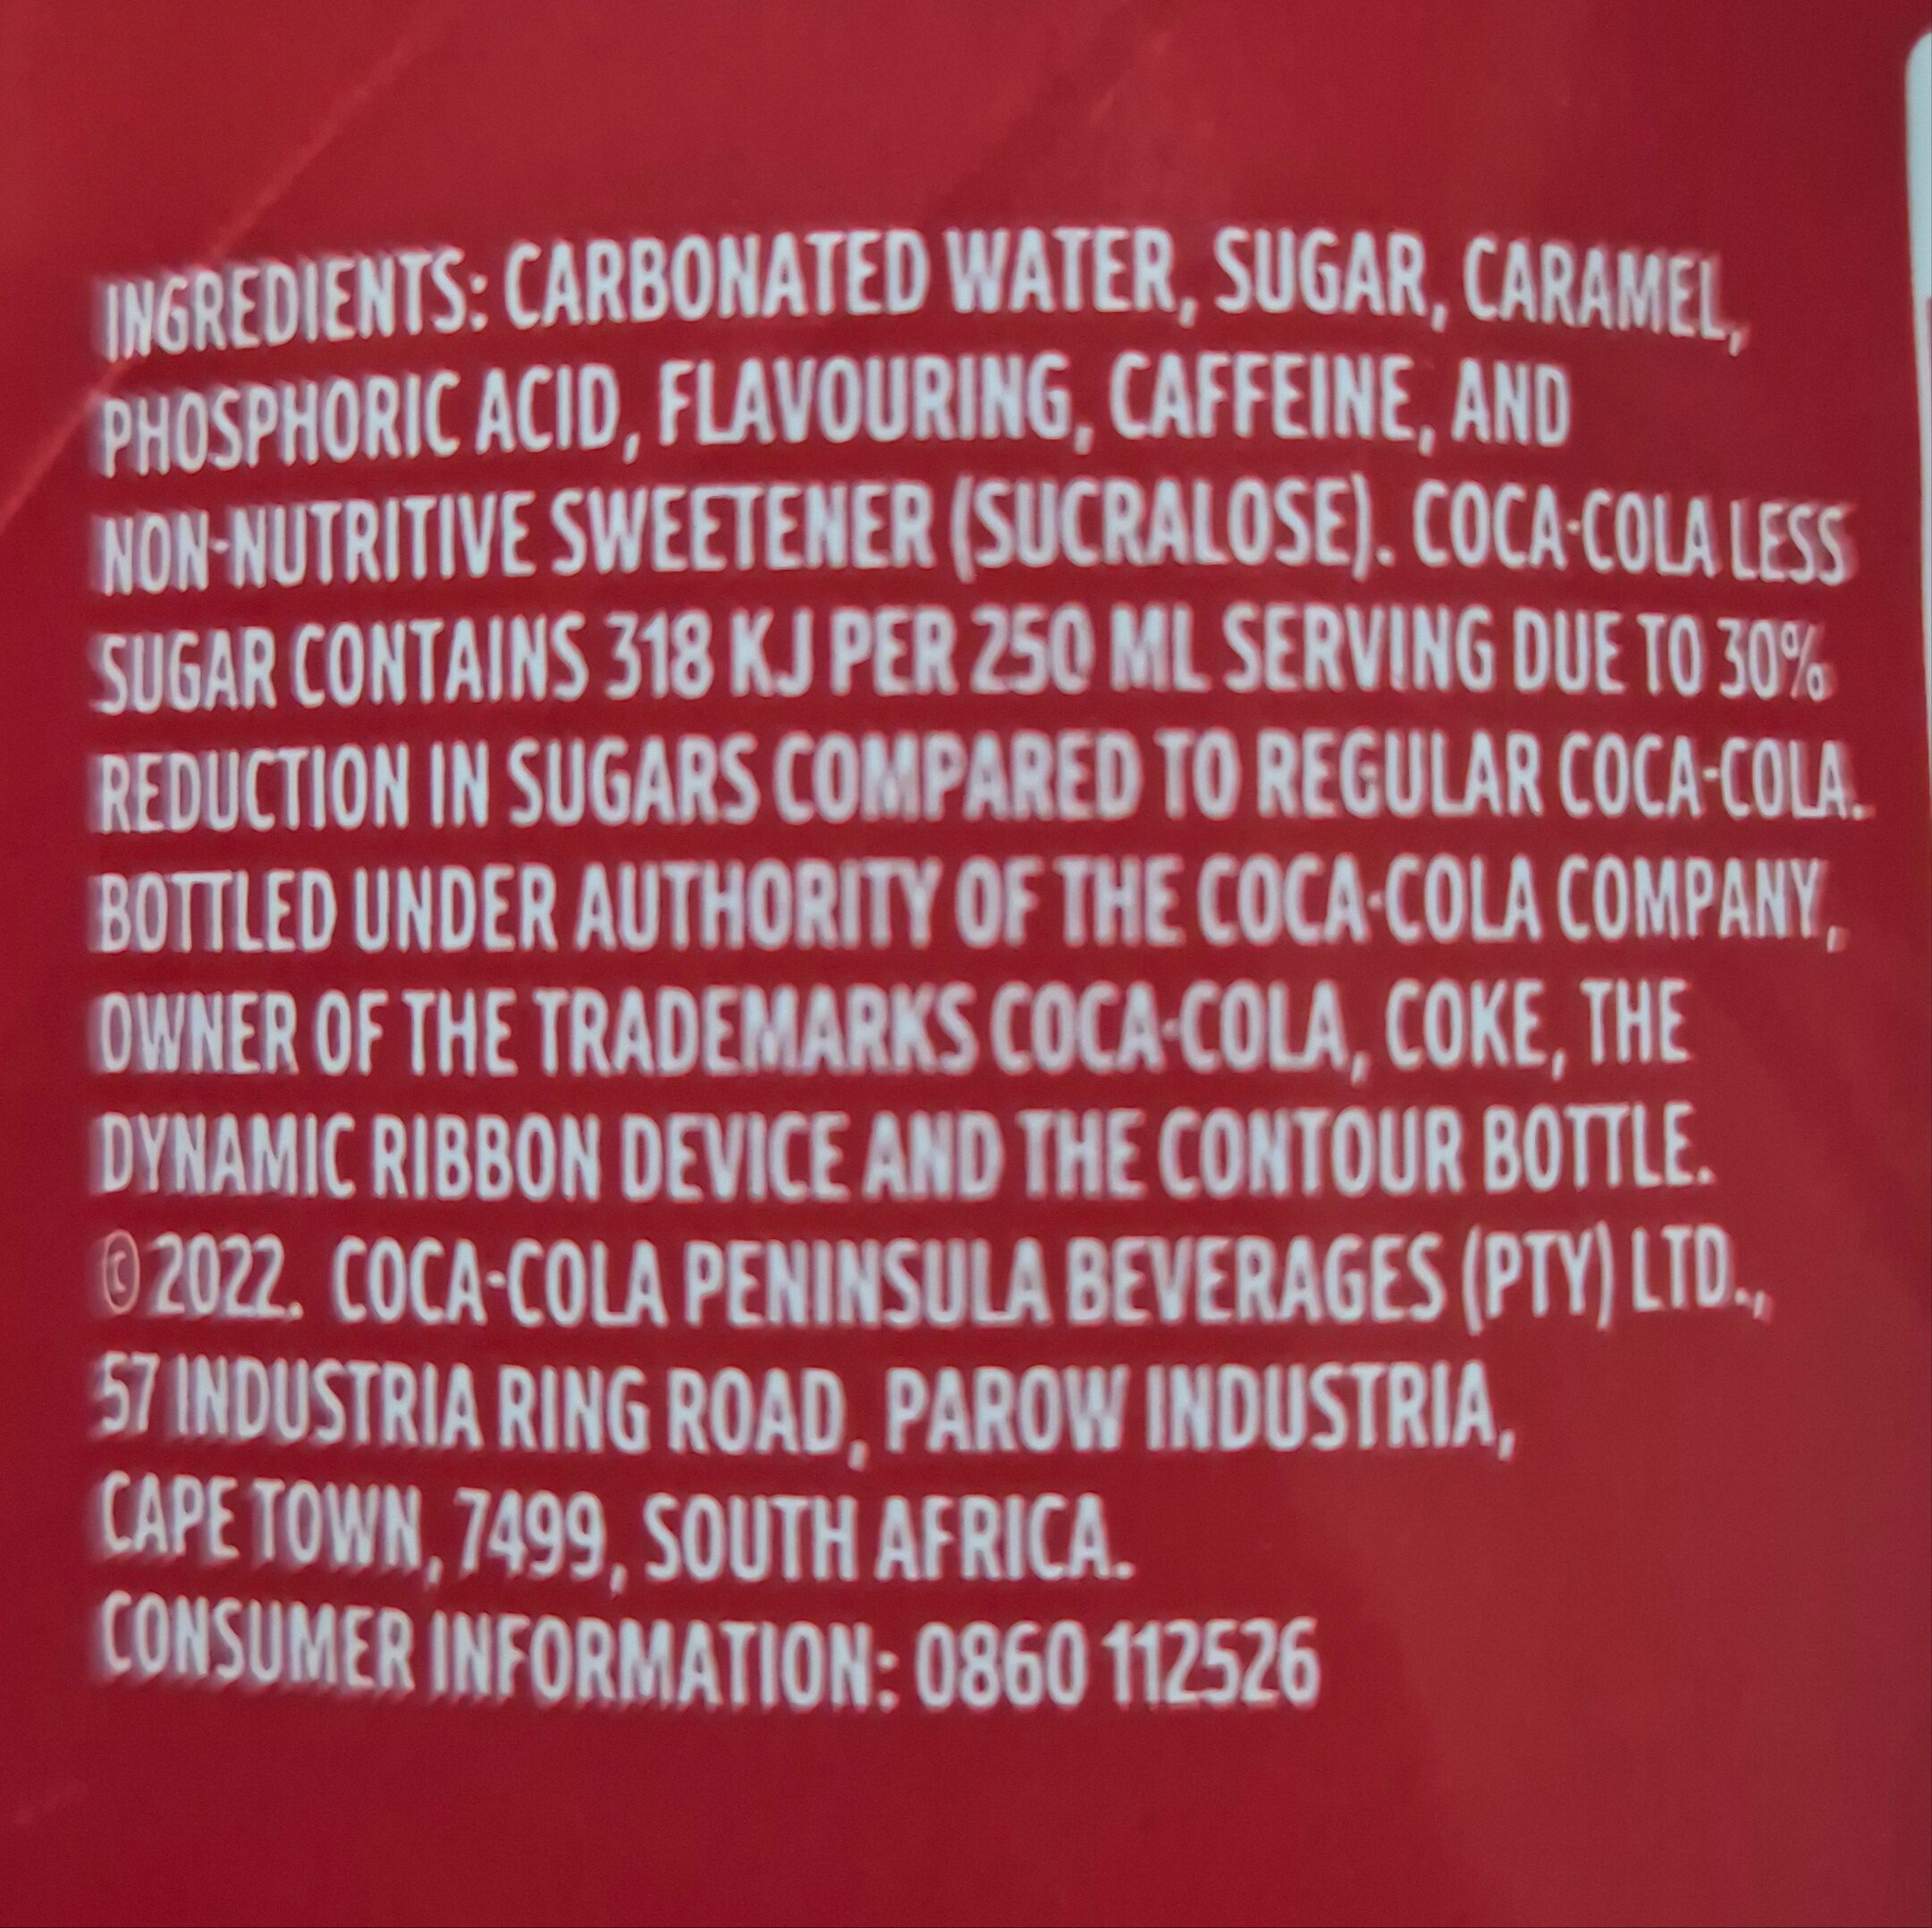 Coca-Cola Less Sugar - Ingredients